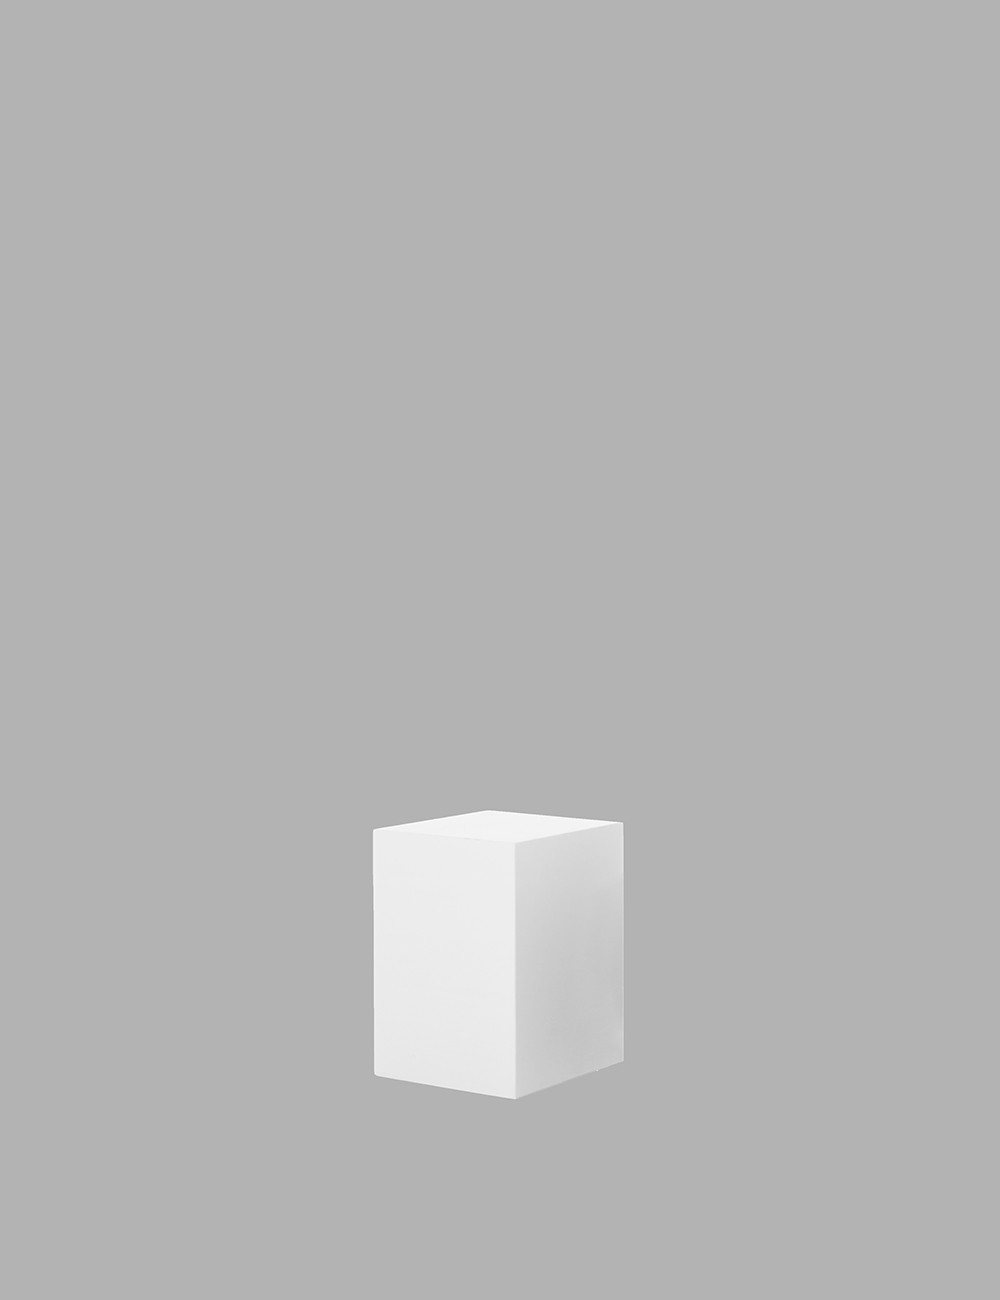 D'APONTE POSING PROPS Cubo Bianco 25x25x25(h)cm